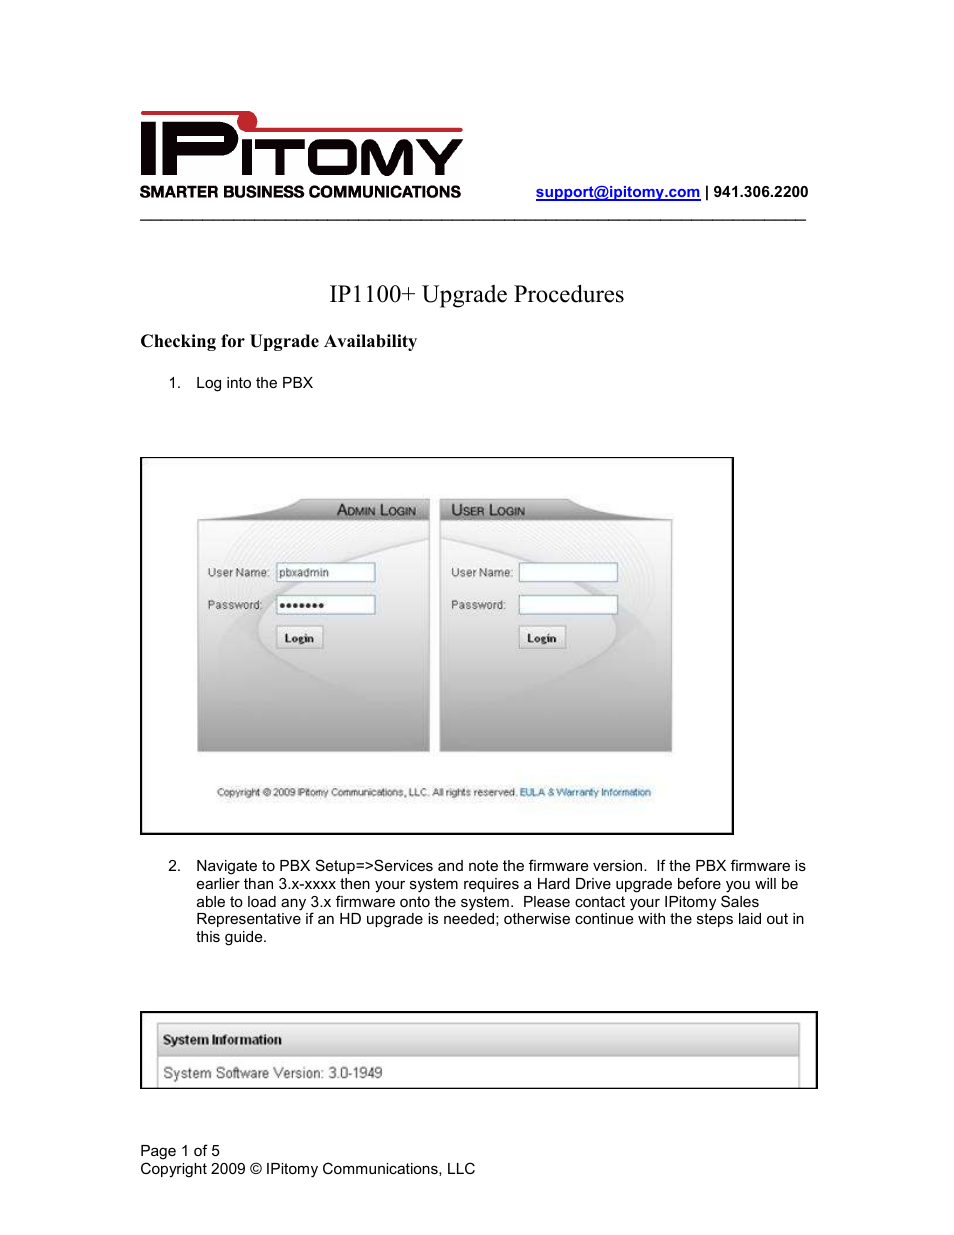 IP1100+ Upgrade Guide